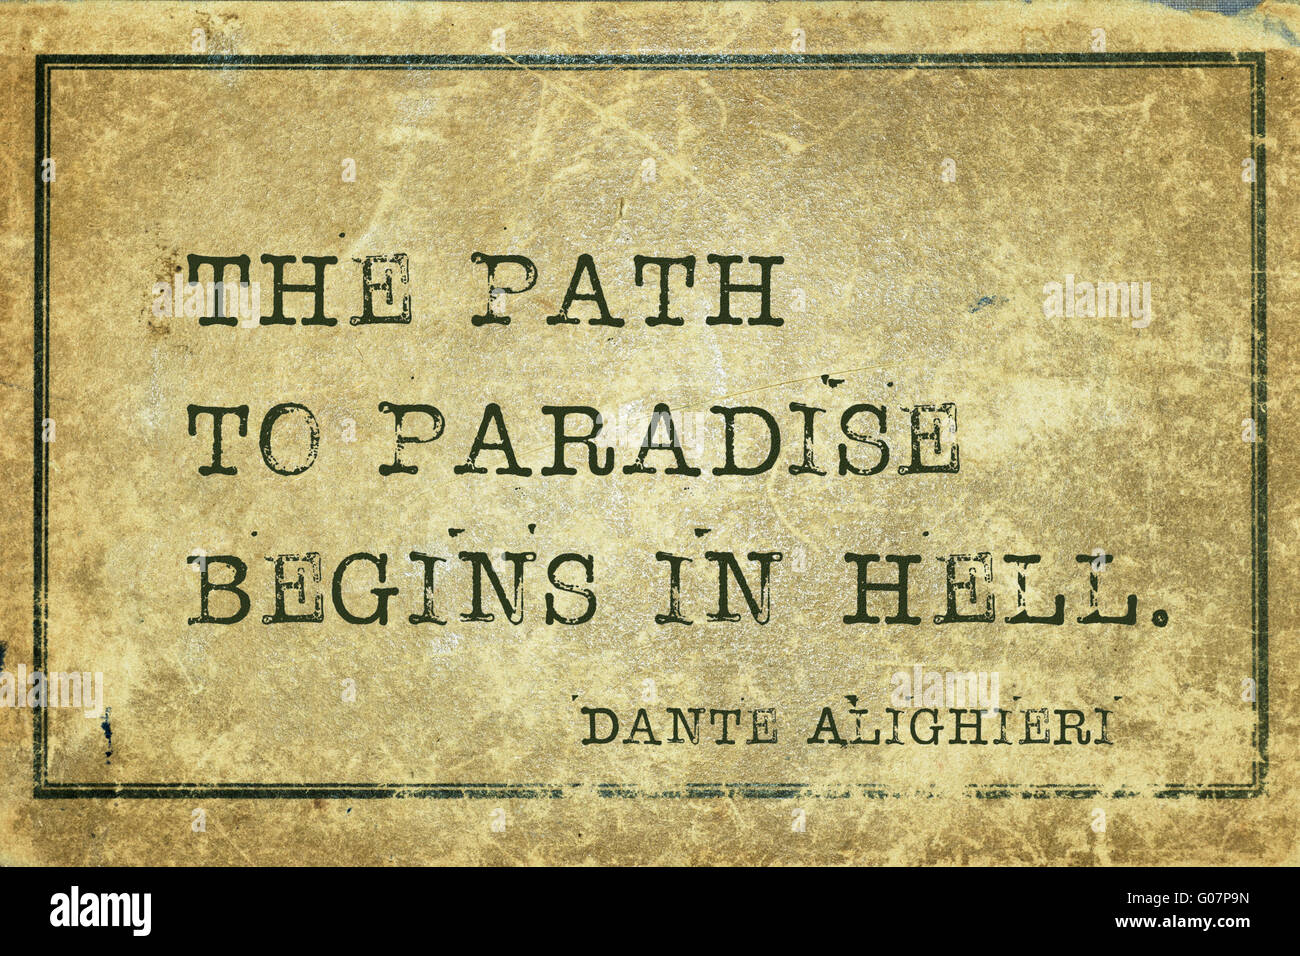 dante path to paradise